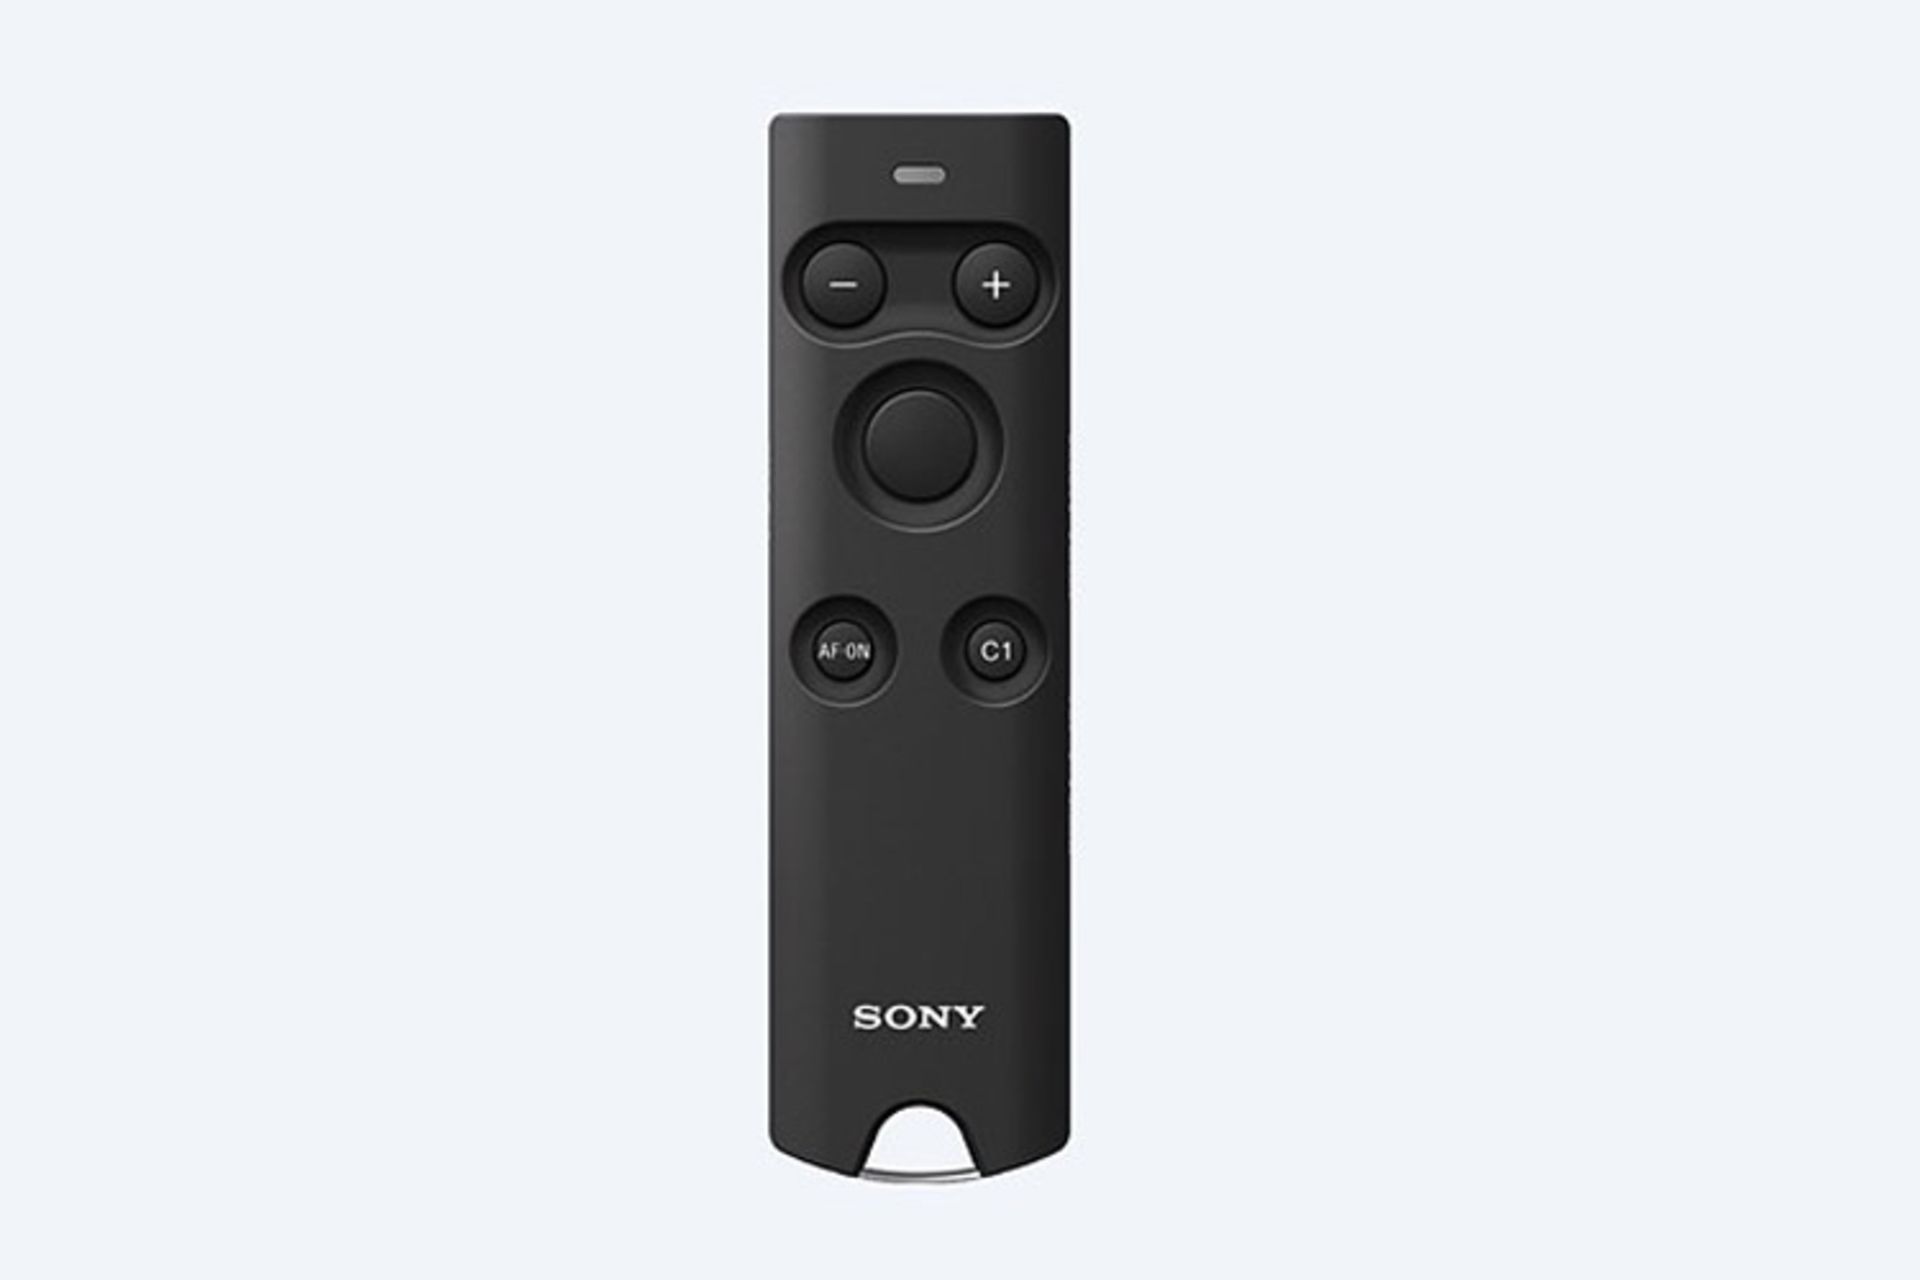 sony remote control for cameras